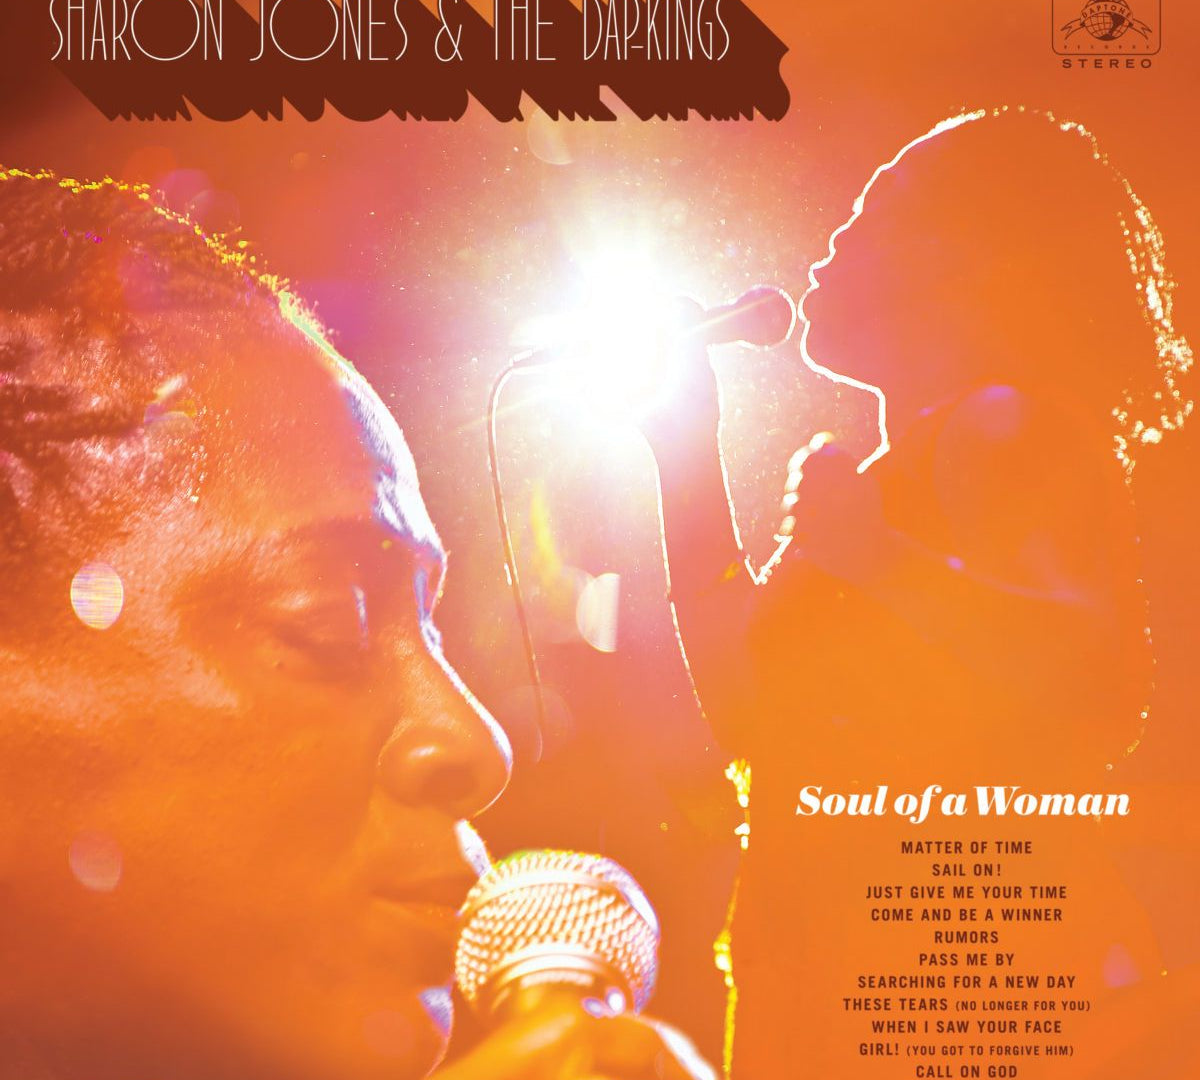 Sharon Jones & The Dap-Kings - Soul of a Woman